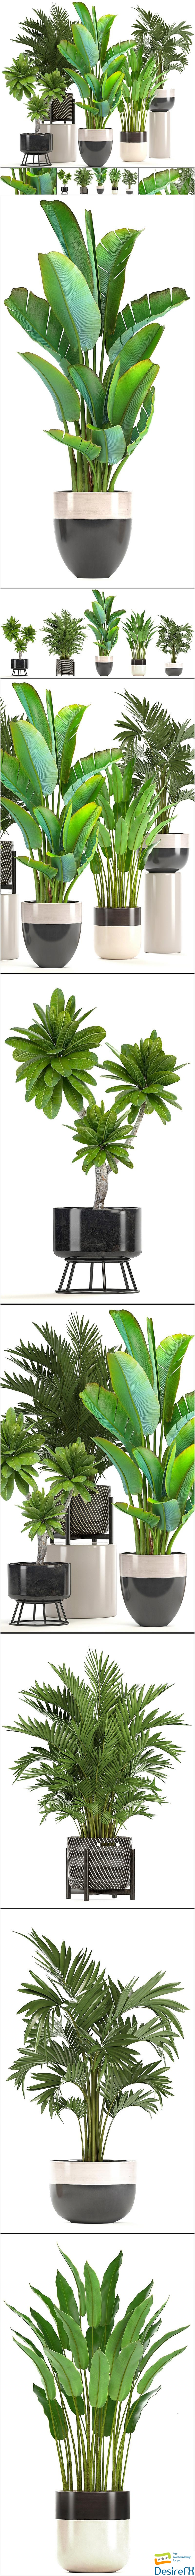 Collection of plants. strelitzia, hovea, palm tree, bush, banana, indoor plants 3D Model